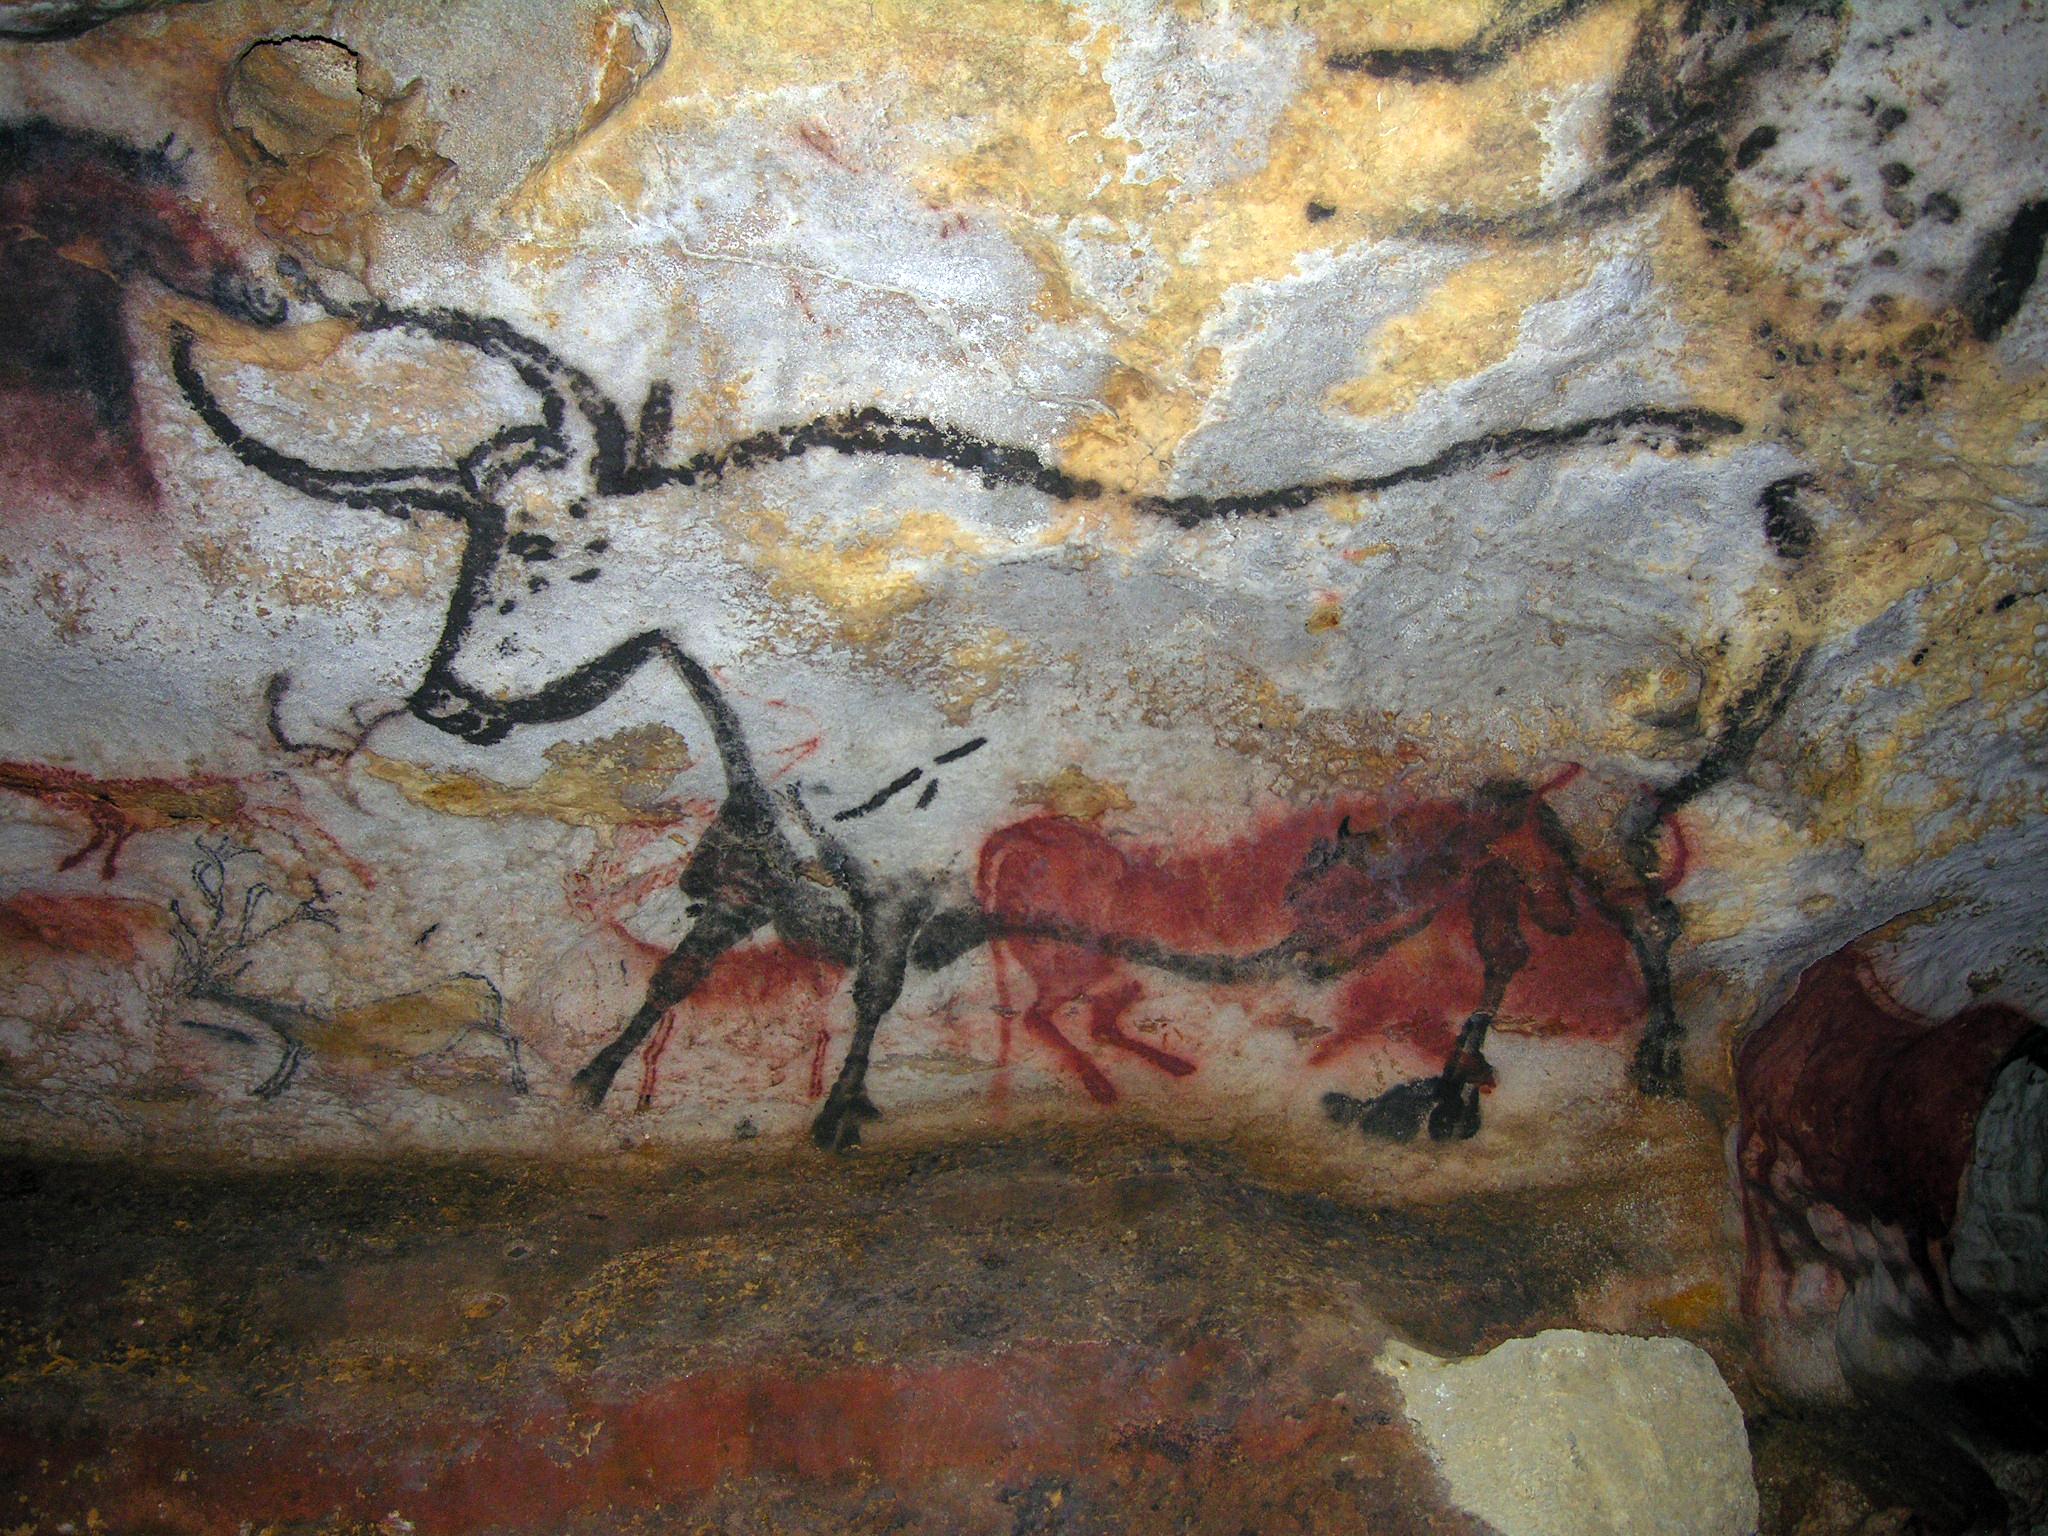 Pictura rupestră a unui taur.